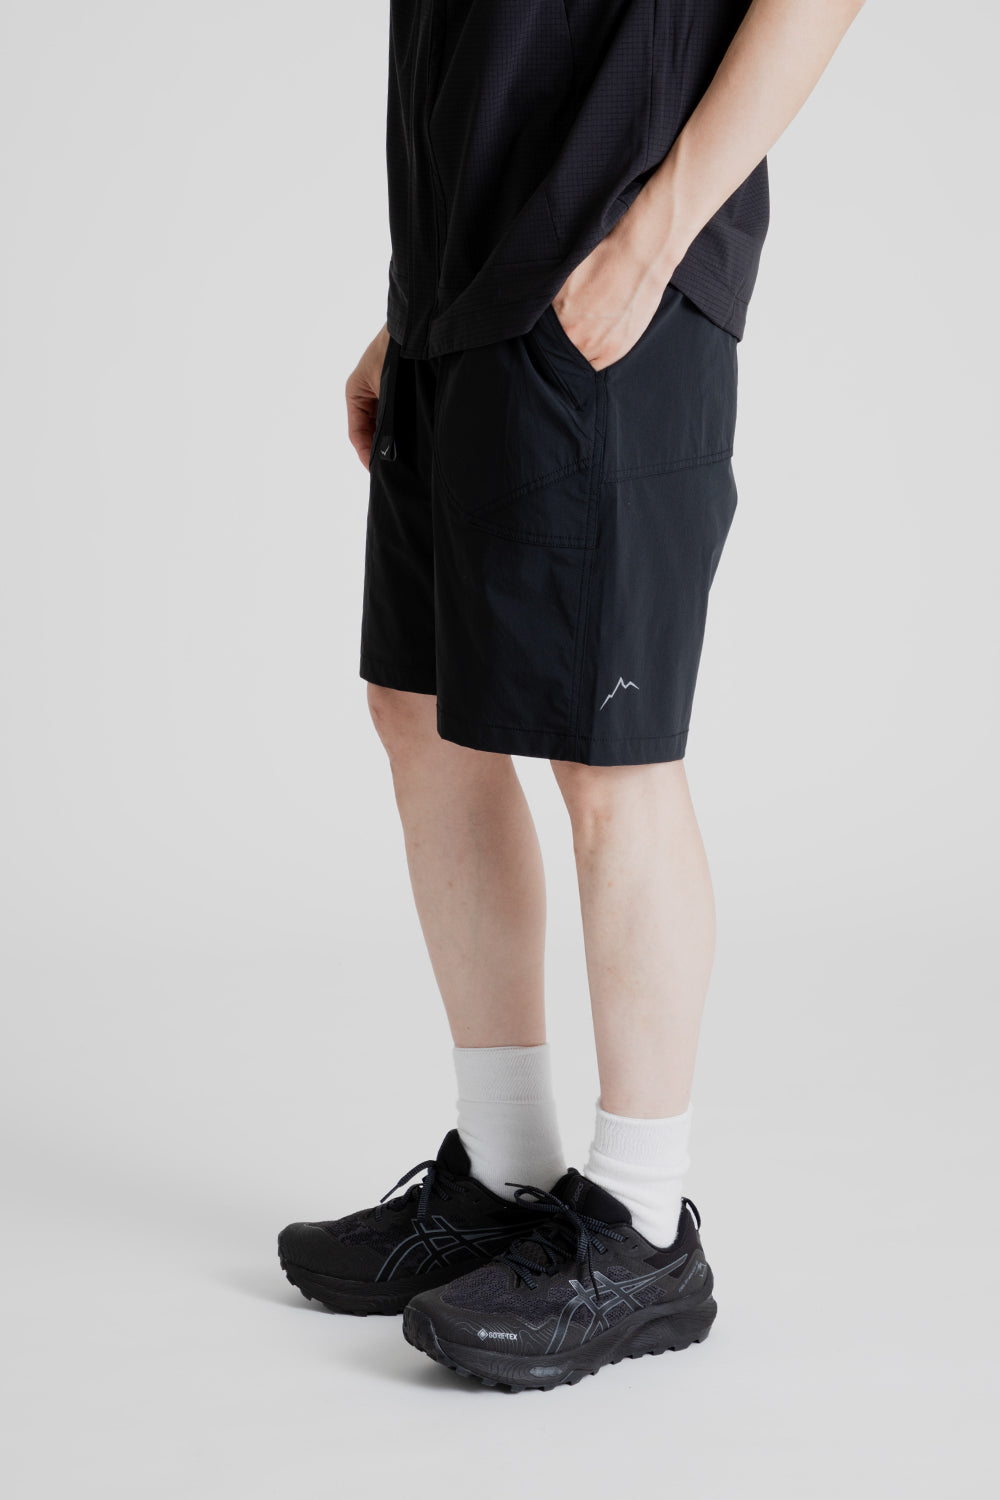 Cayl Nylon Limber Shorts in Black